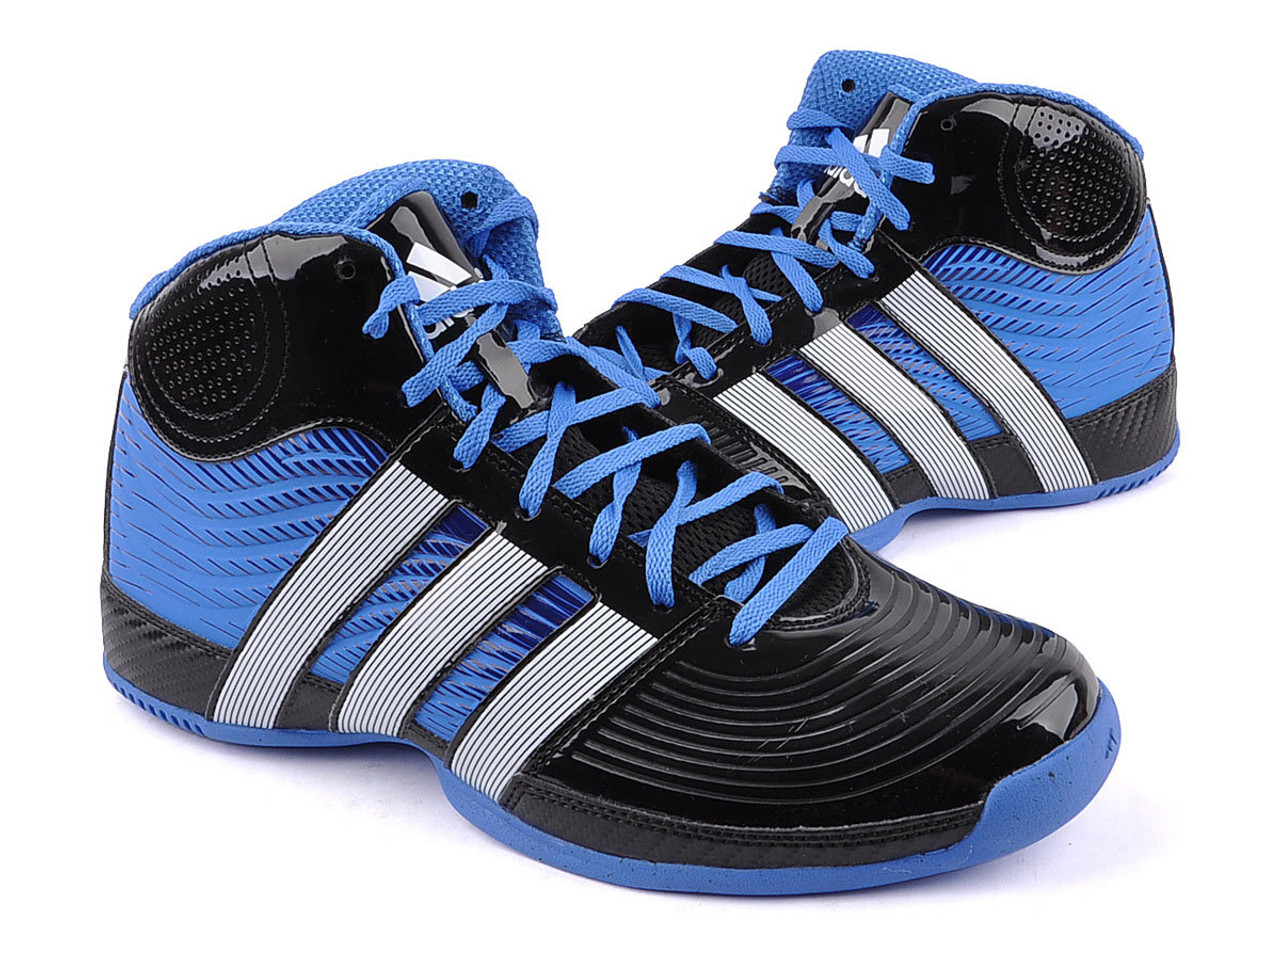 Adidas Commander TD 4 Black/Blue Basketball Shoes - Black/Blue | Discount Adidas Men's Athletic Shoes & - Shoolu.com | Shoolu.com